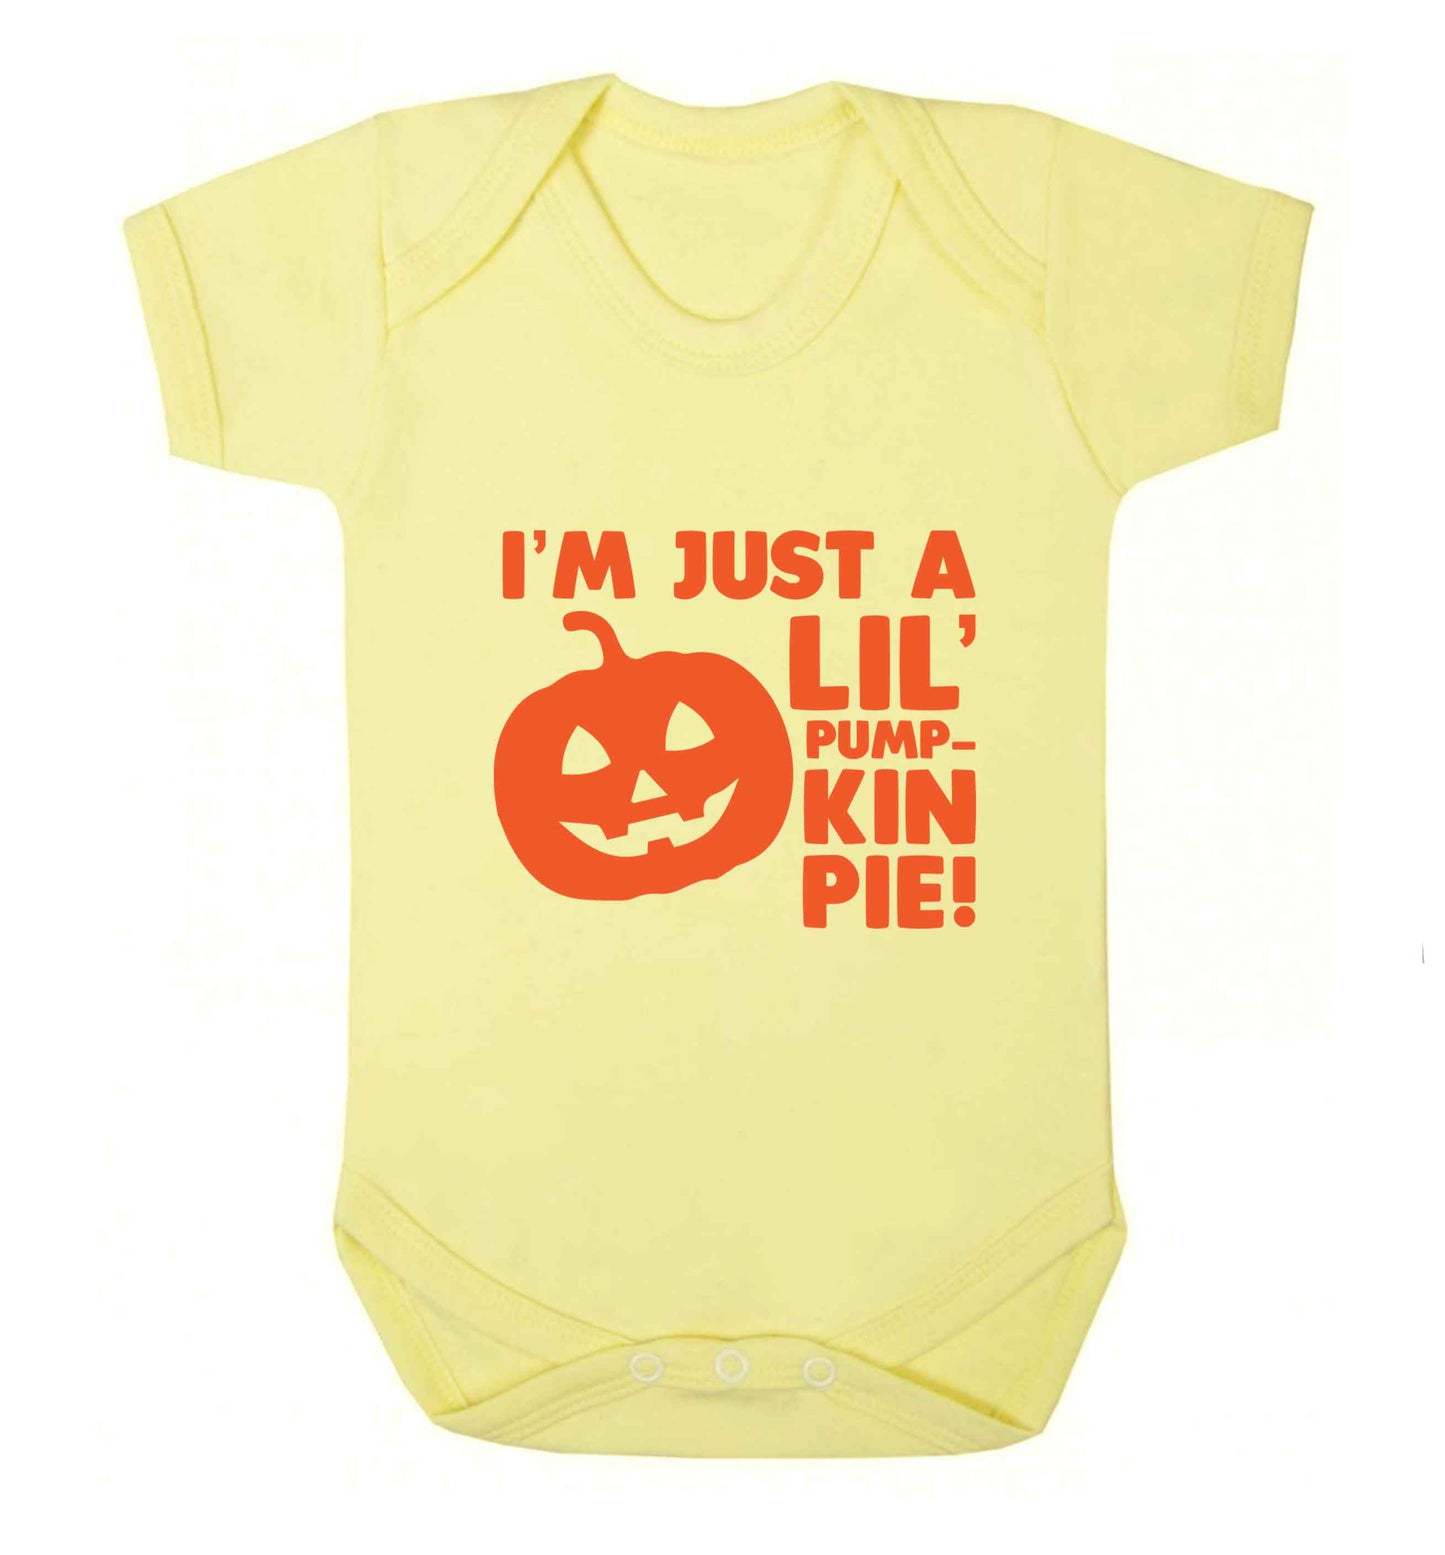 I'm just a lil' pumpkin pie baby vest pale yellow 18-24 months